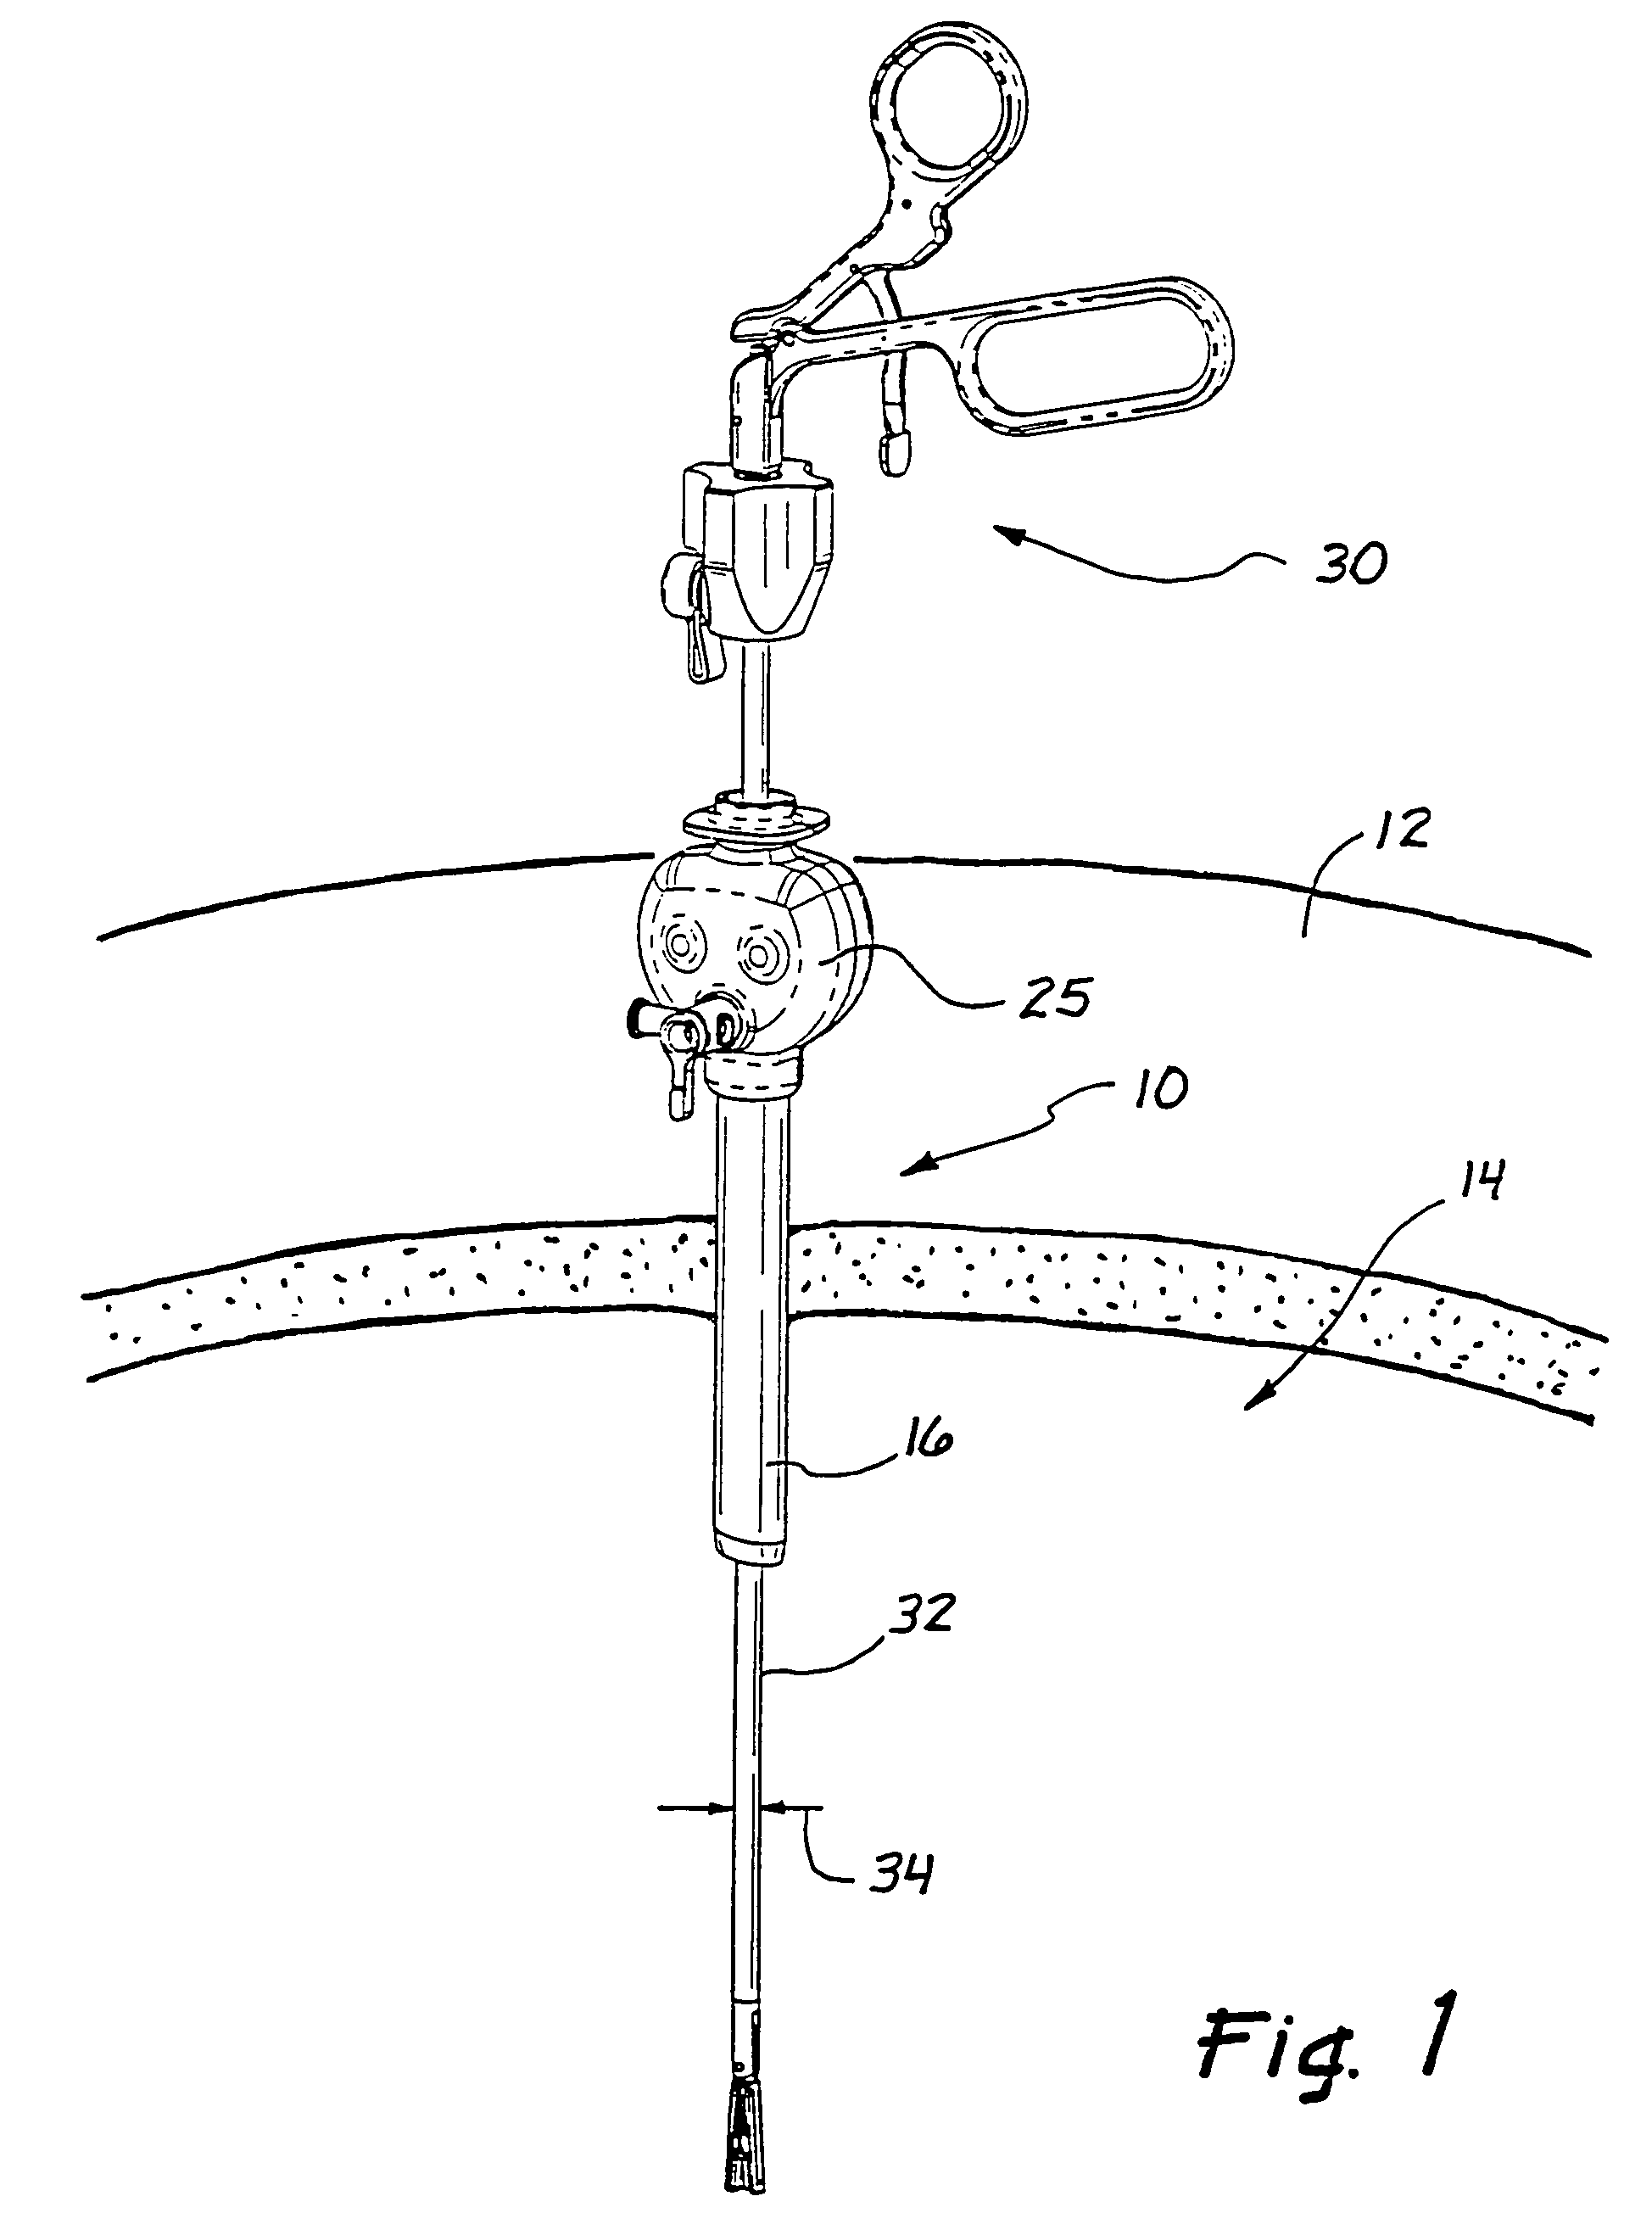 Access sealing apparatus and method